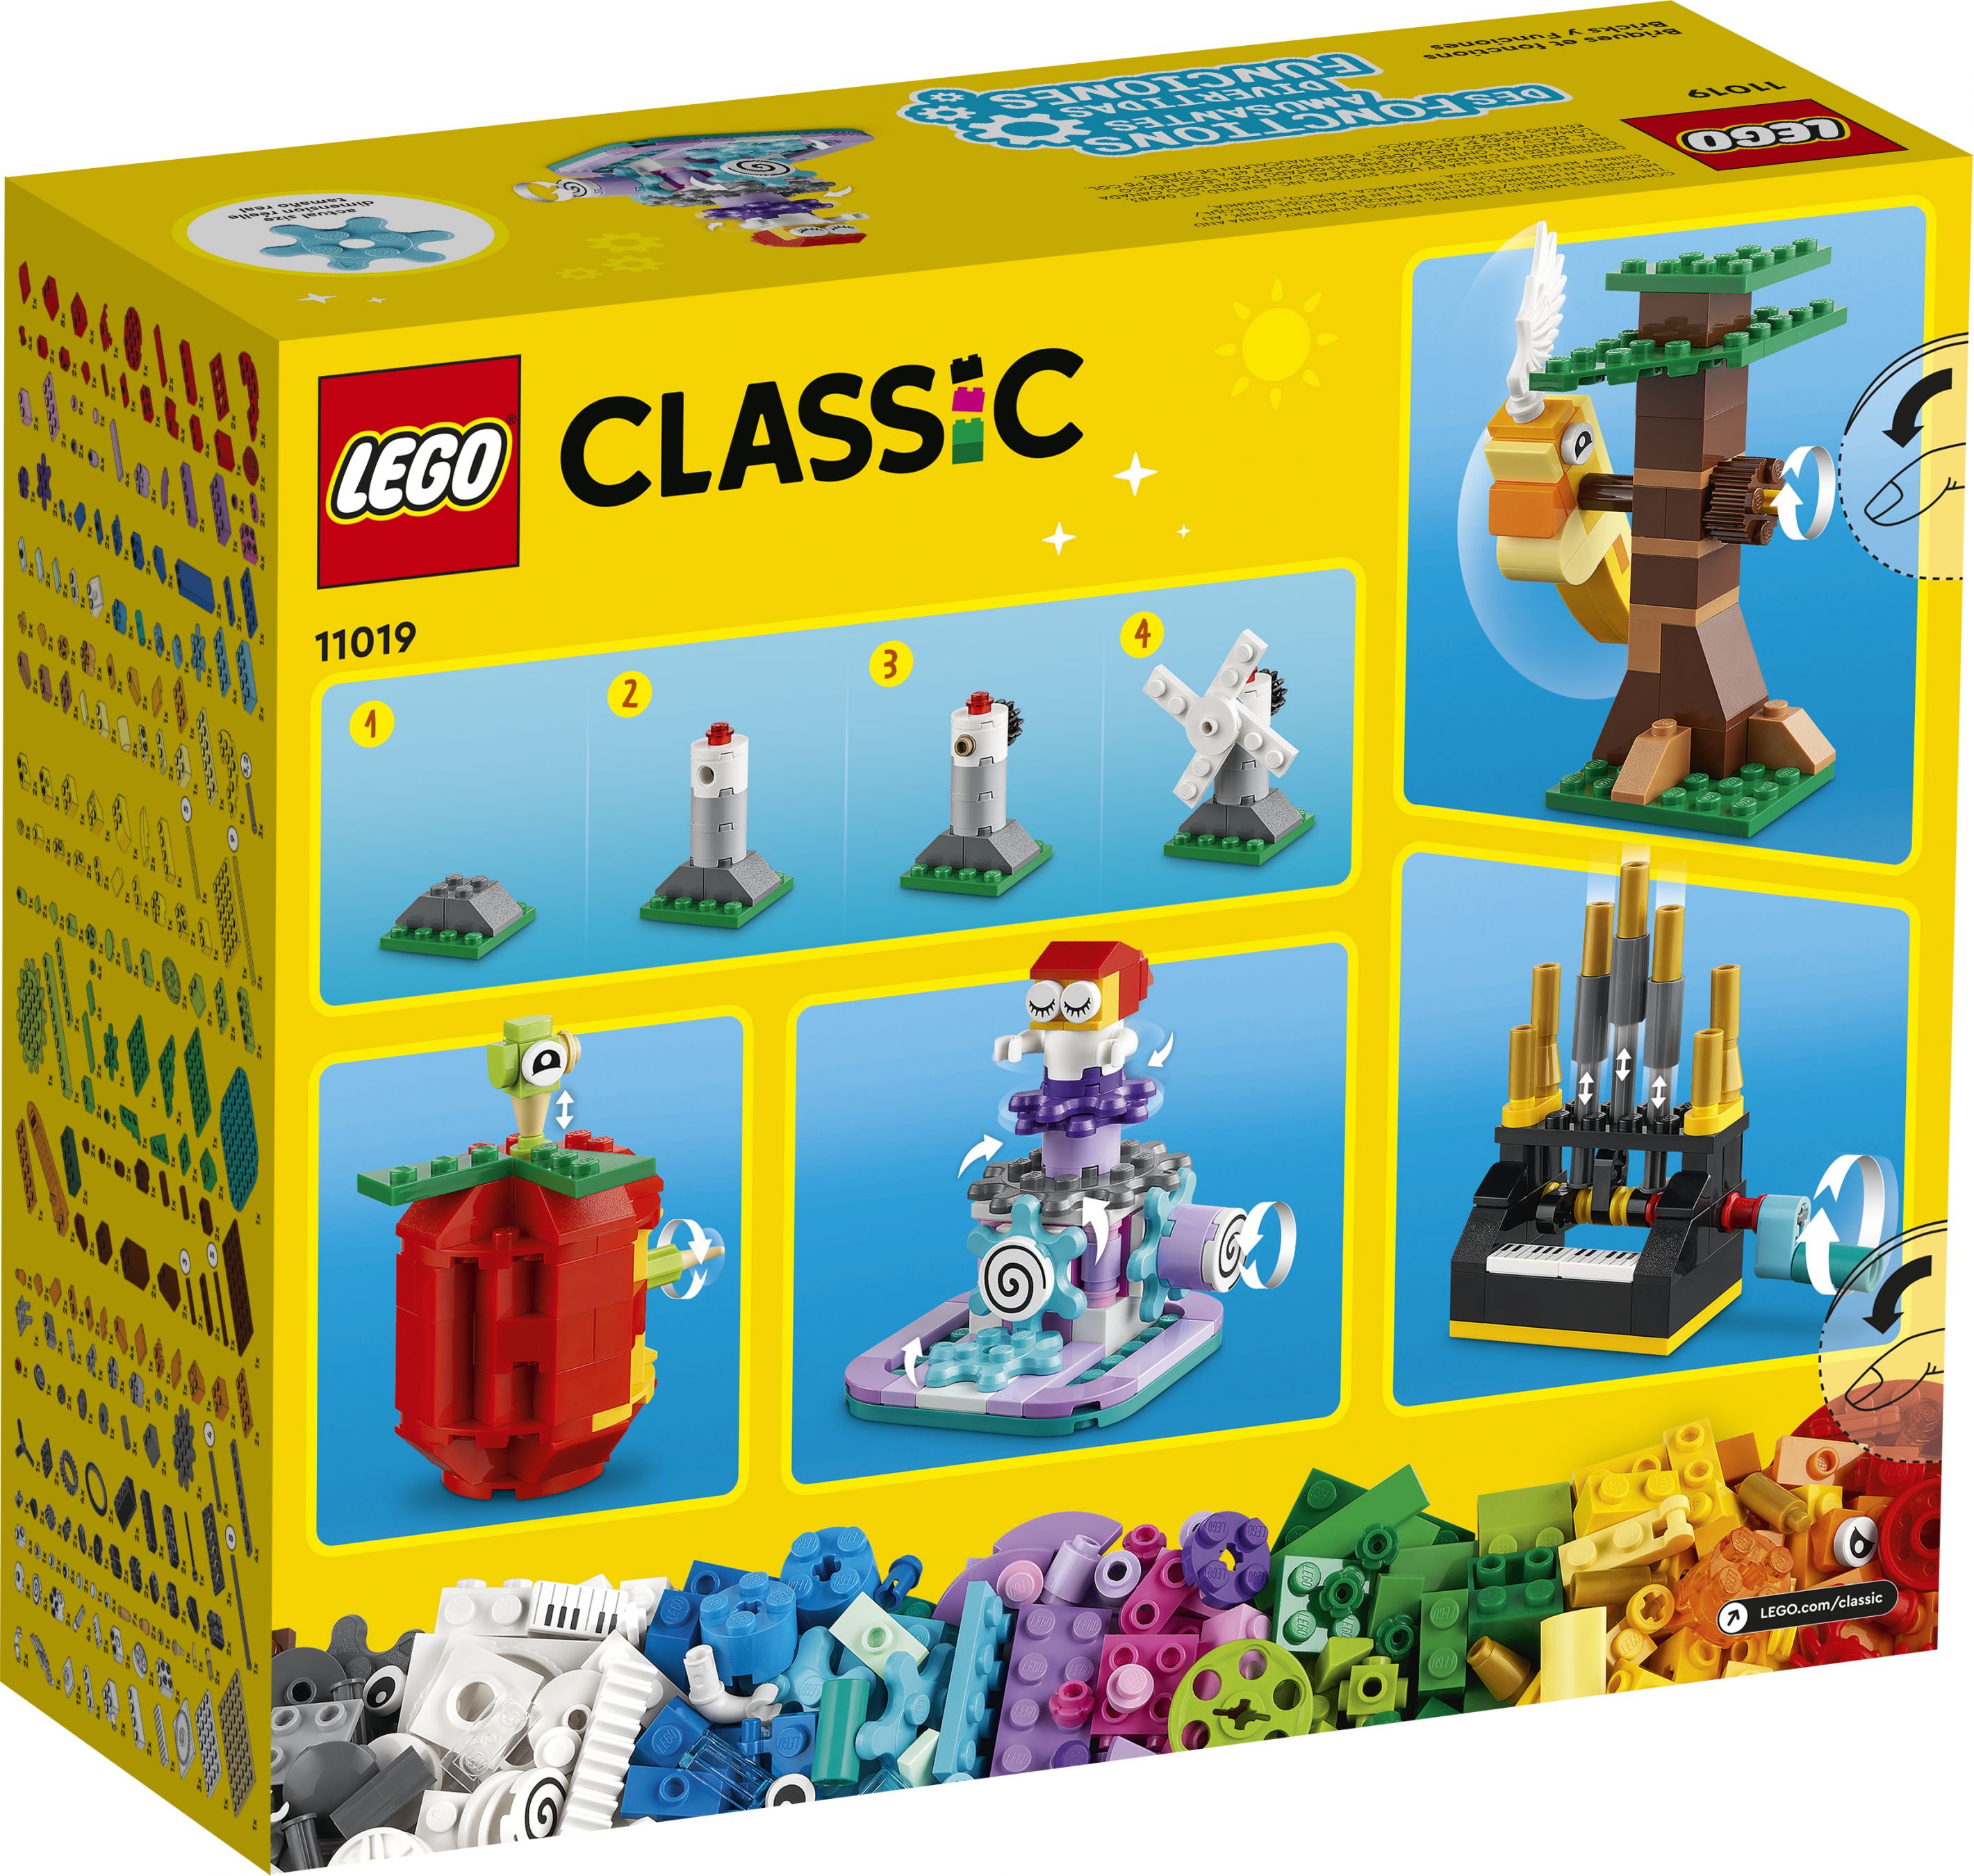 LEGO Classic 11019 Bausteine und Funktionen LEGO_11019_Box5_v39.jpg